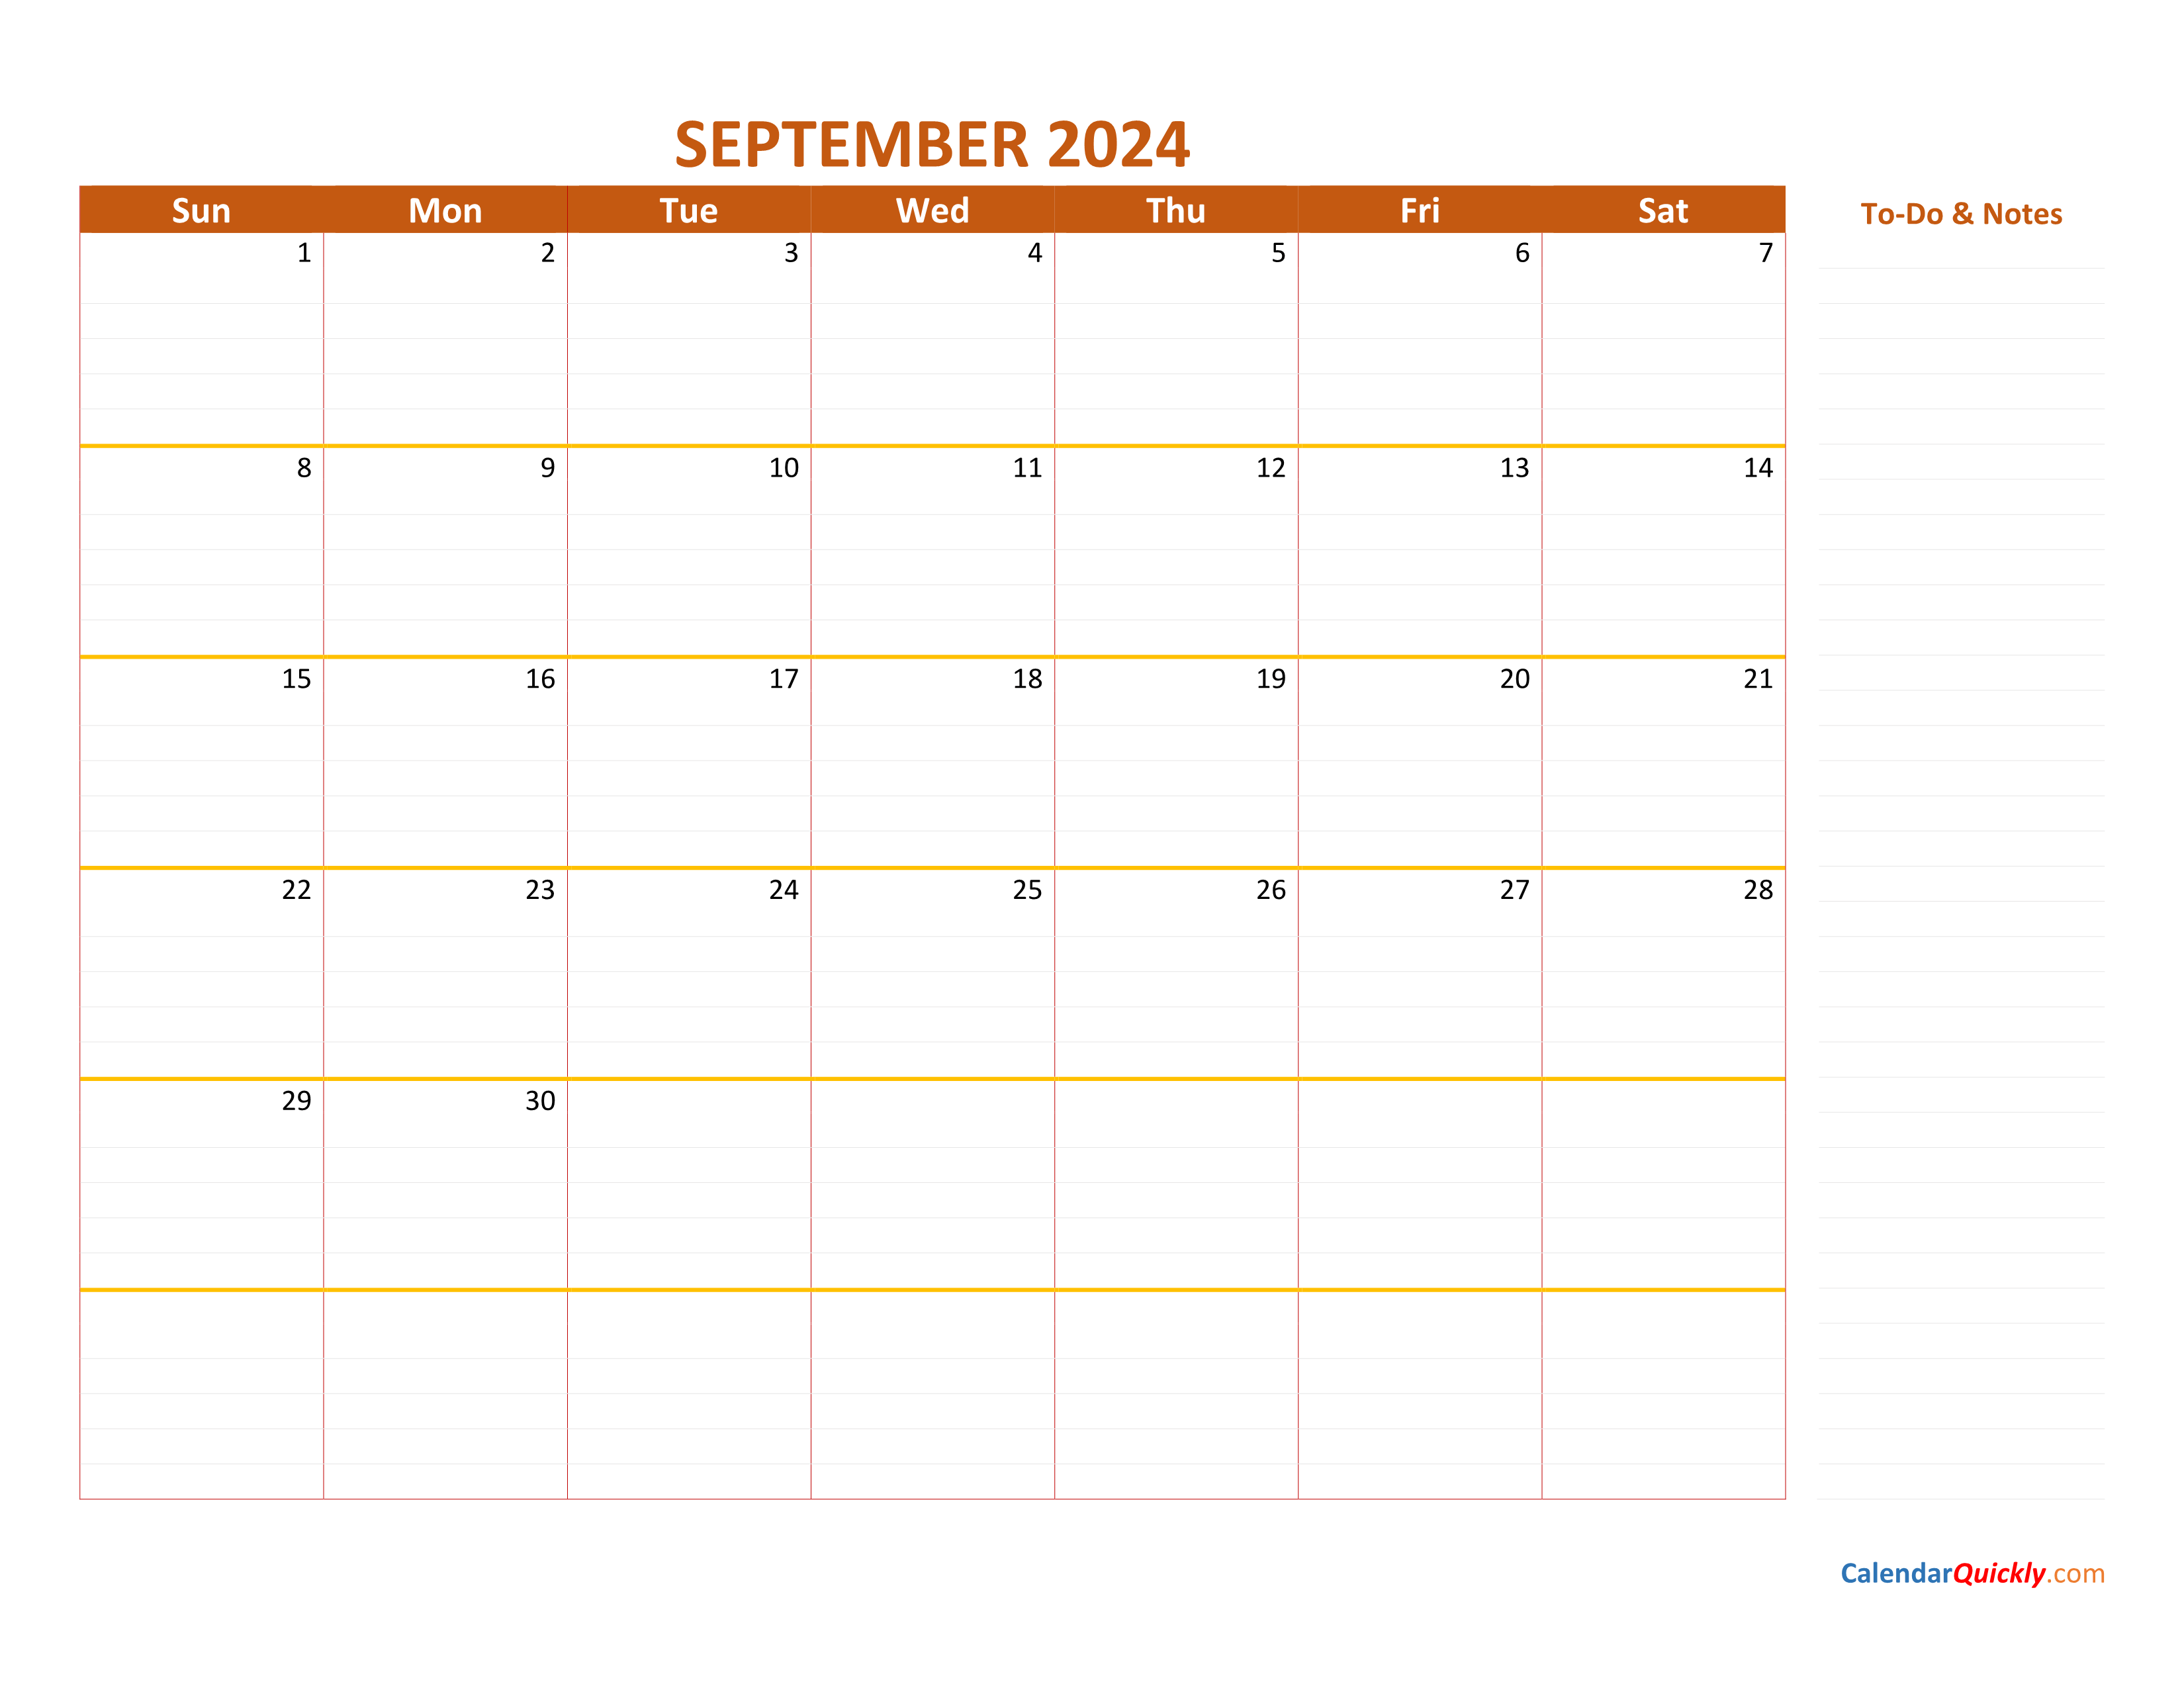 september-2024-calendar-calendar-quickly